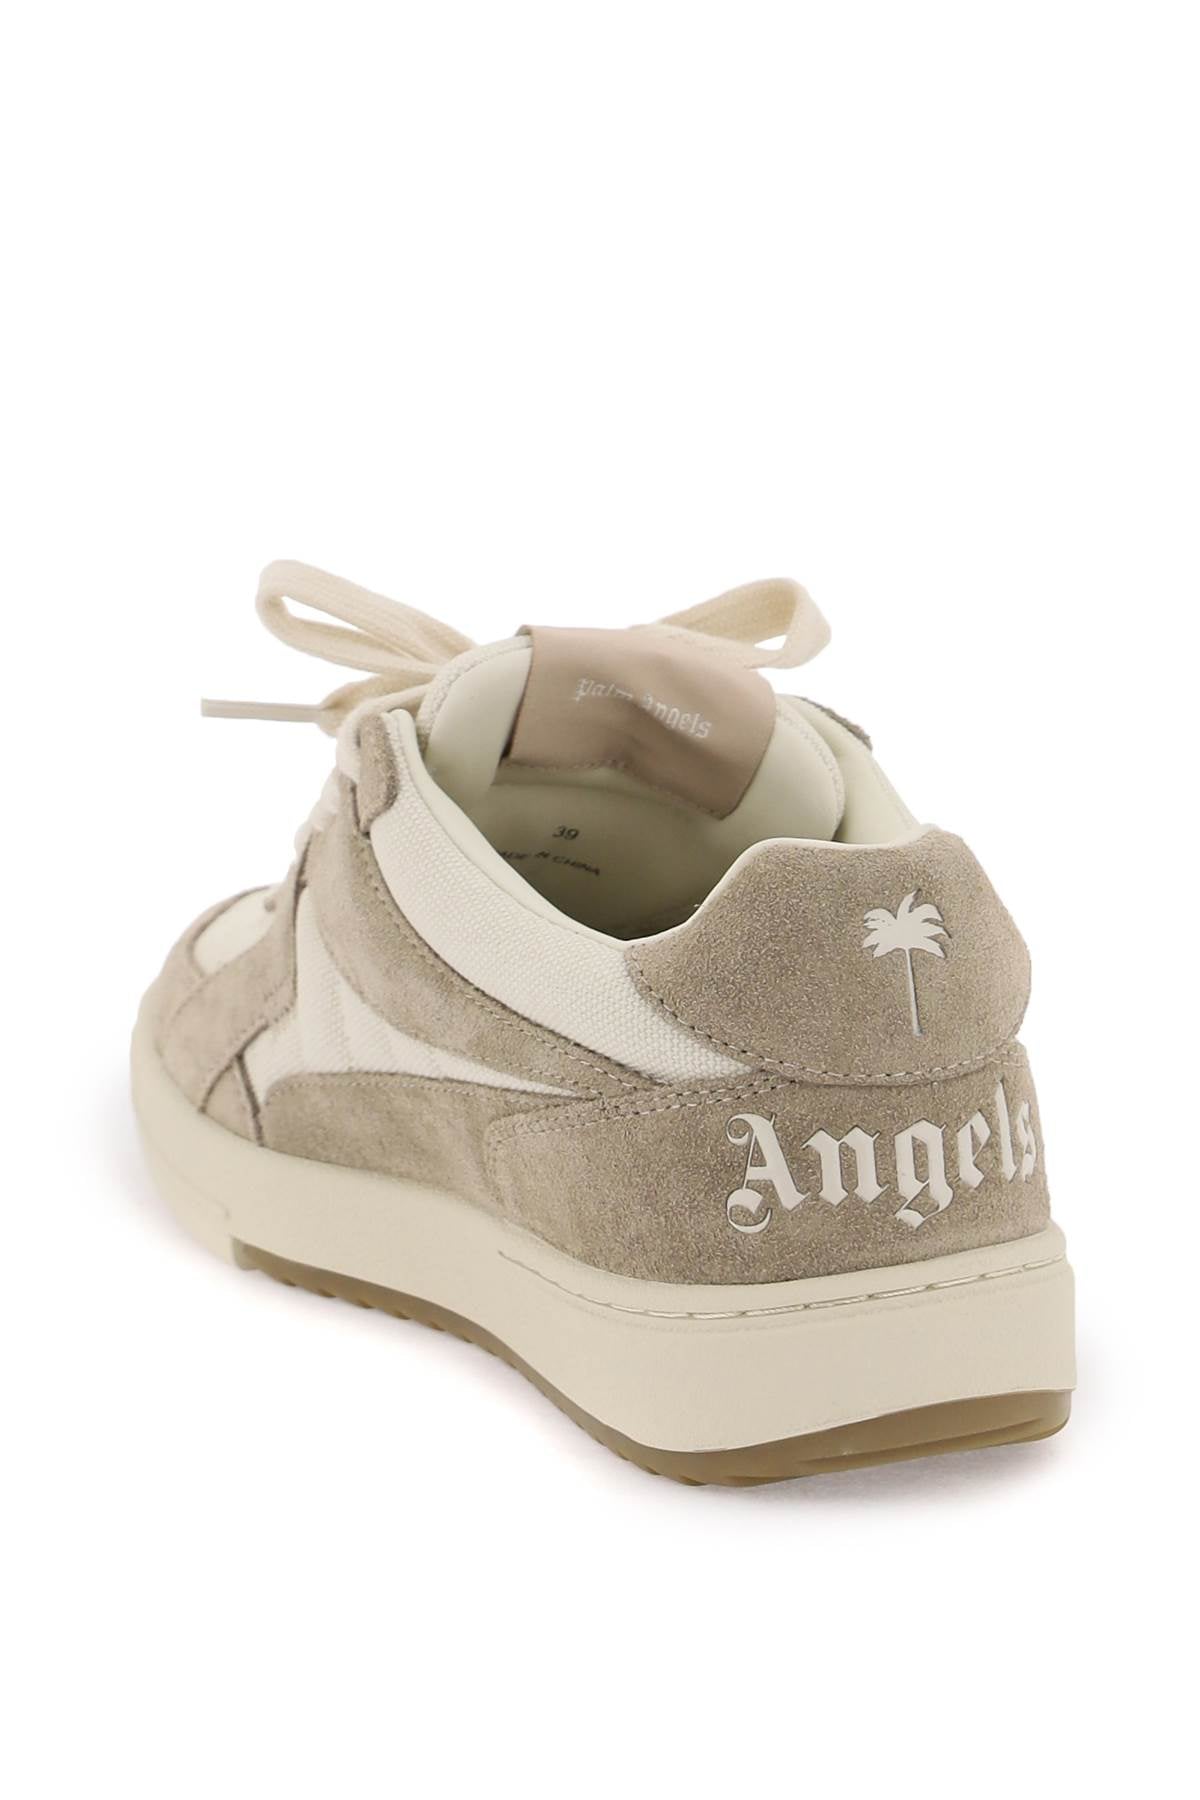 Palm angels university sneakers-2